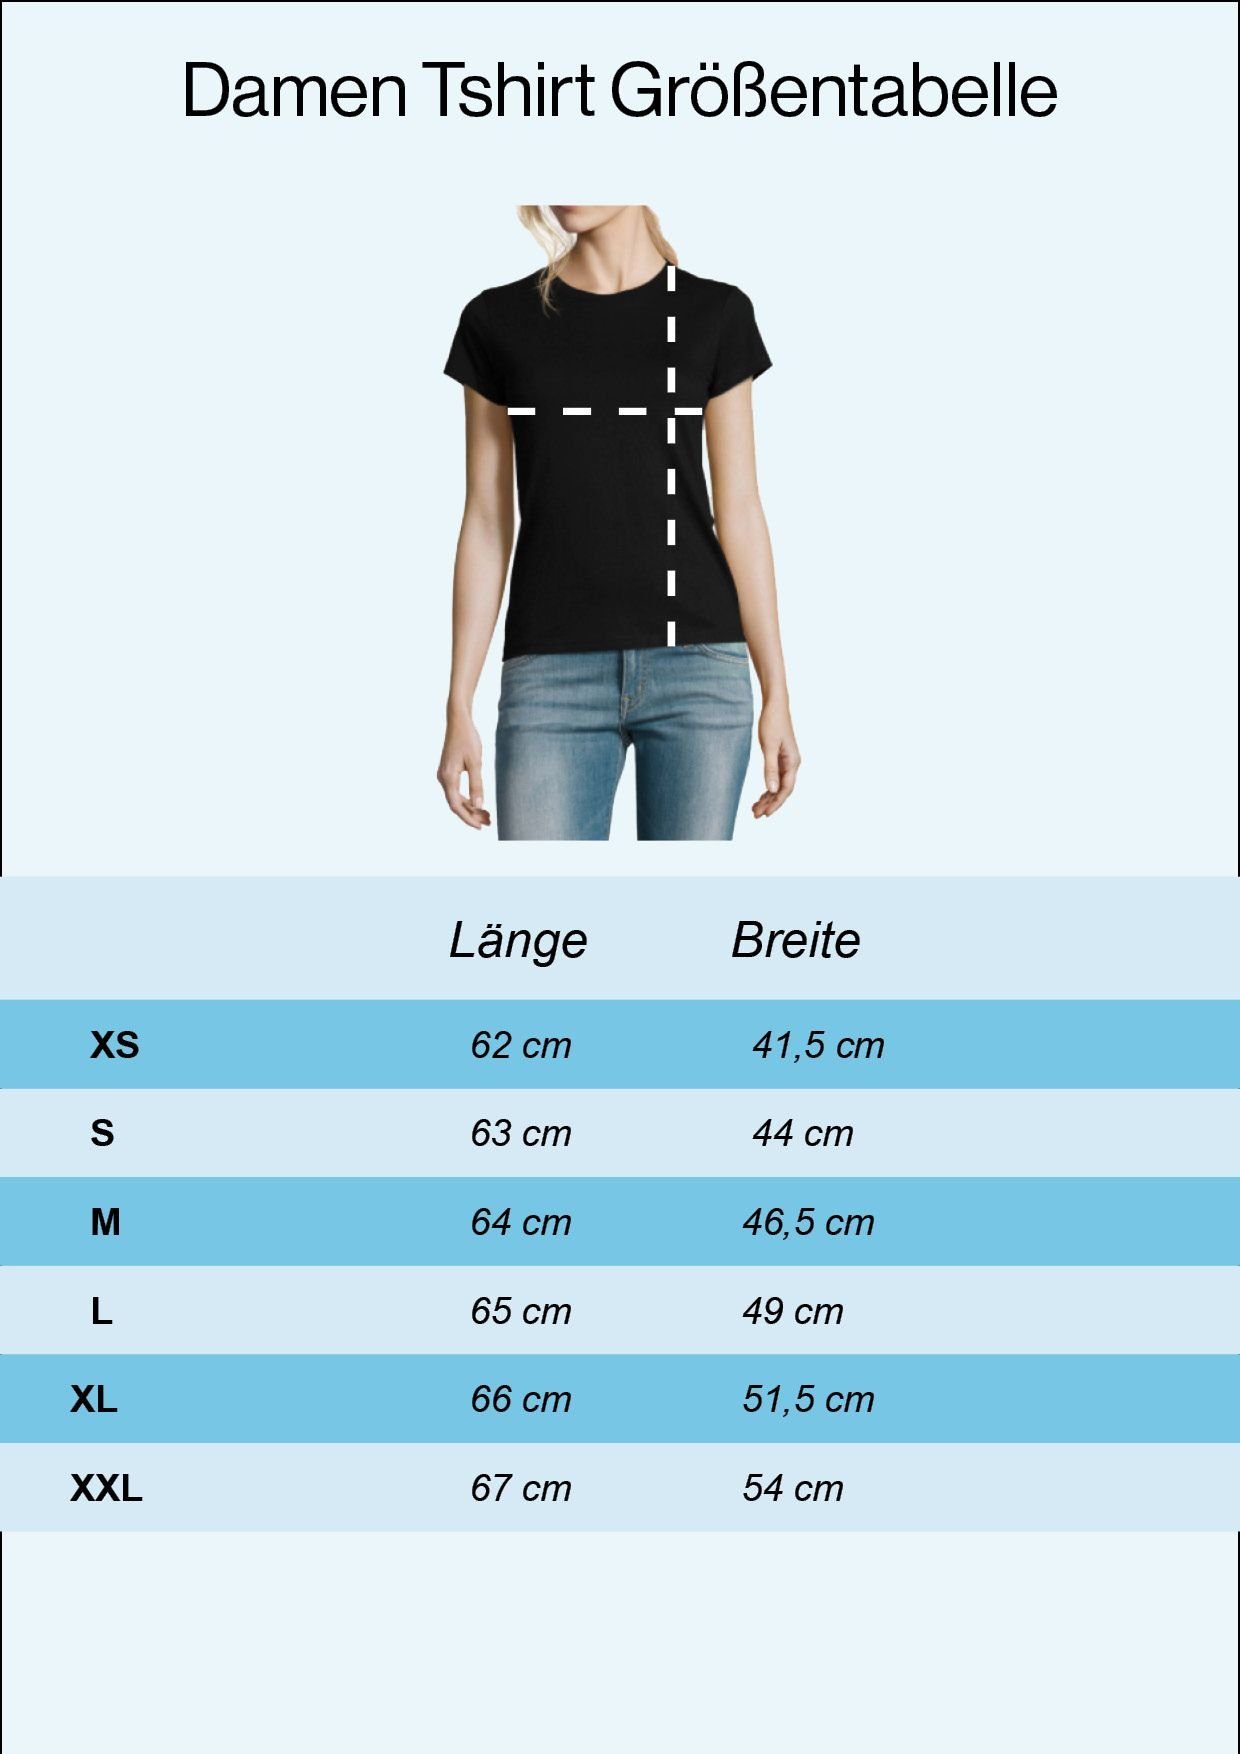 Youth Designz T-Shirt Wander Woman Mit Grau modischem Damen Print T-Shirt